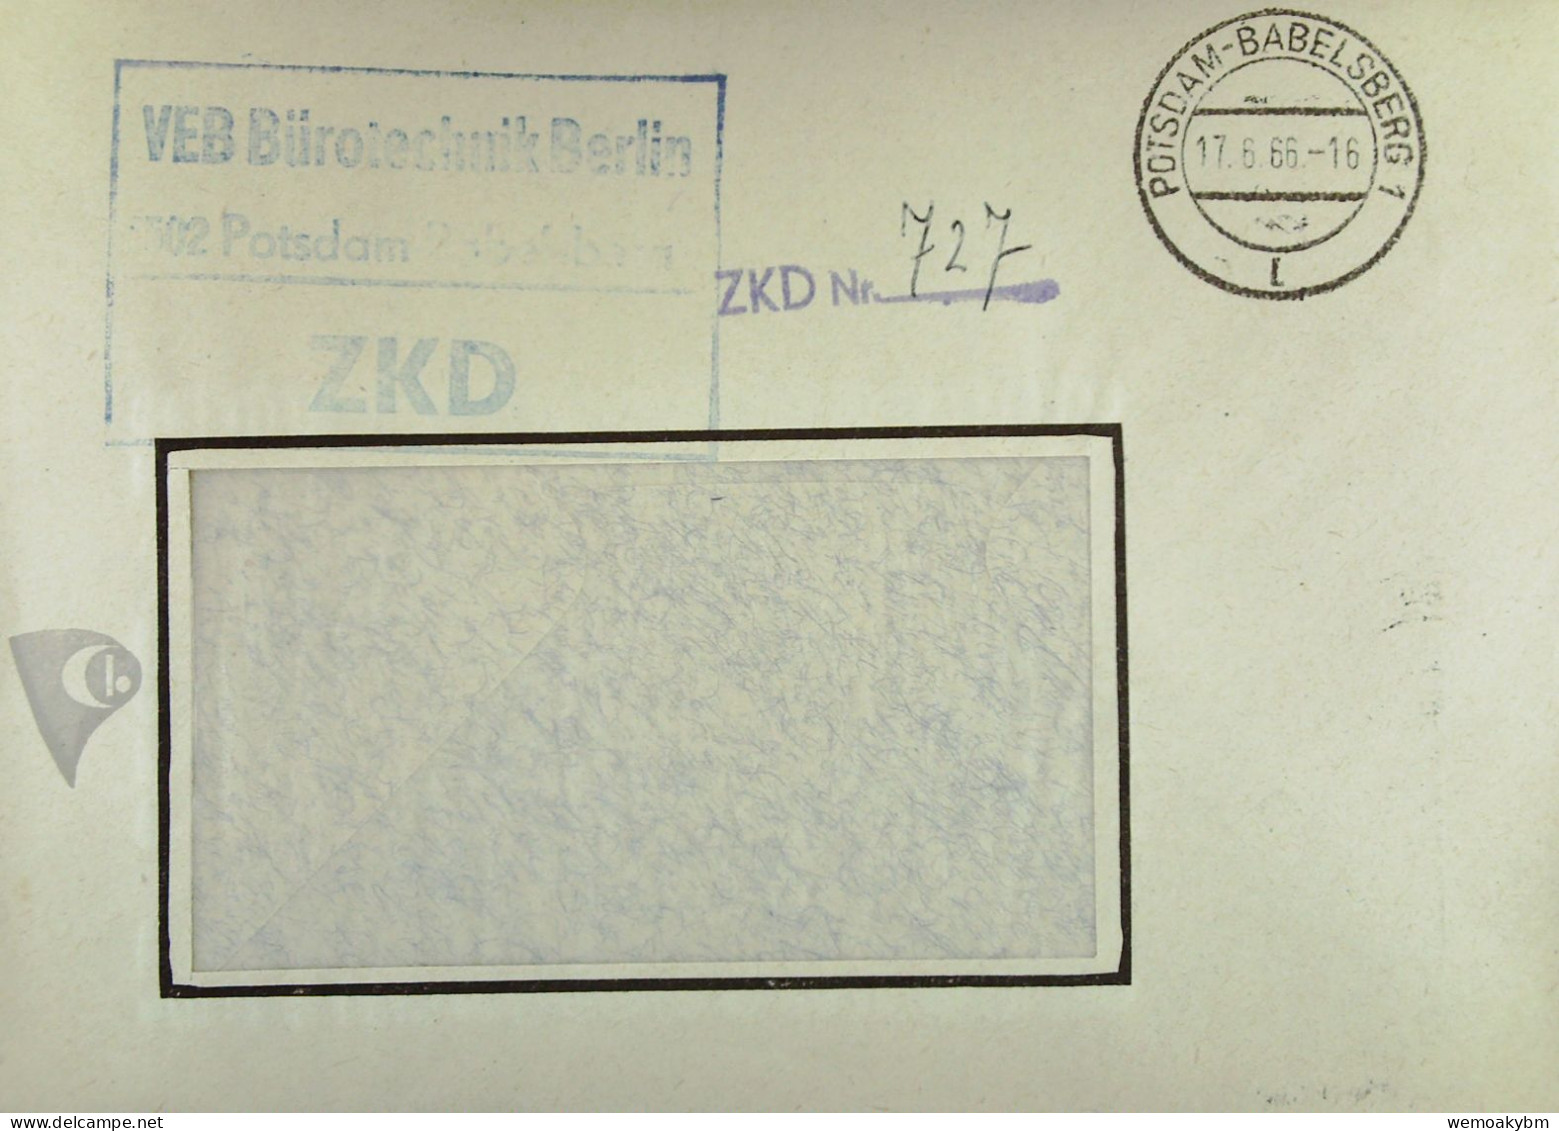 DDR-ZKD-Brief Mit Kastenstempel "VEB Bürotechnik Berlin 1502 Potsdam-Babelsberg" V. 17.6.66  ZKD-Nr. 727 Fensterumschlag - Storia Postale